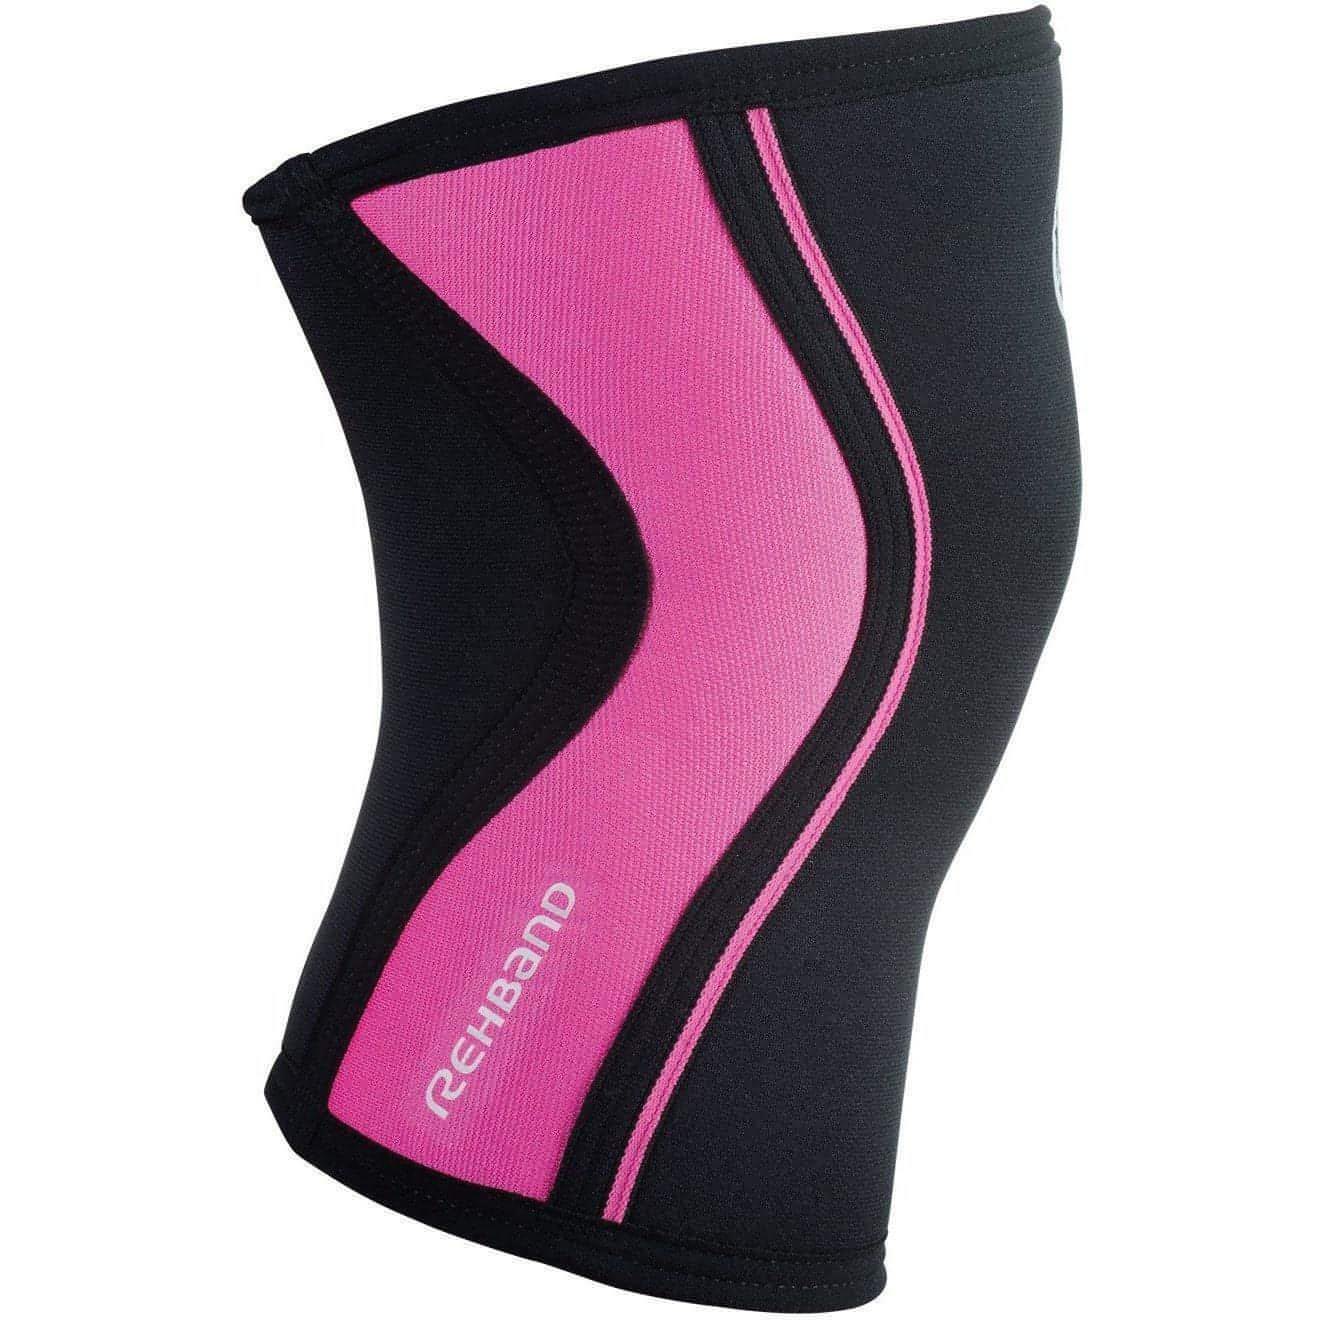 Rehband RX 5mm Knee Sleeve Support - Black - Start Fitness